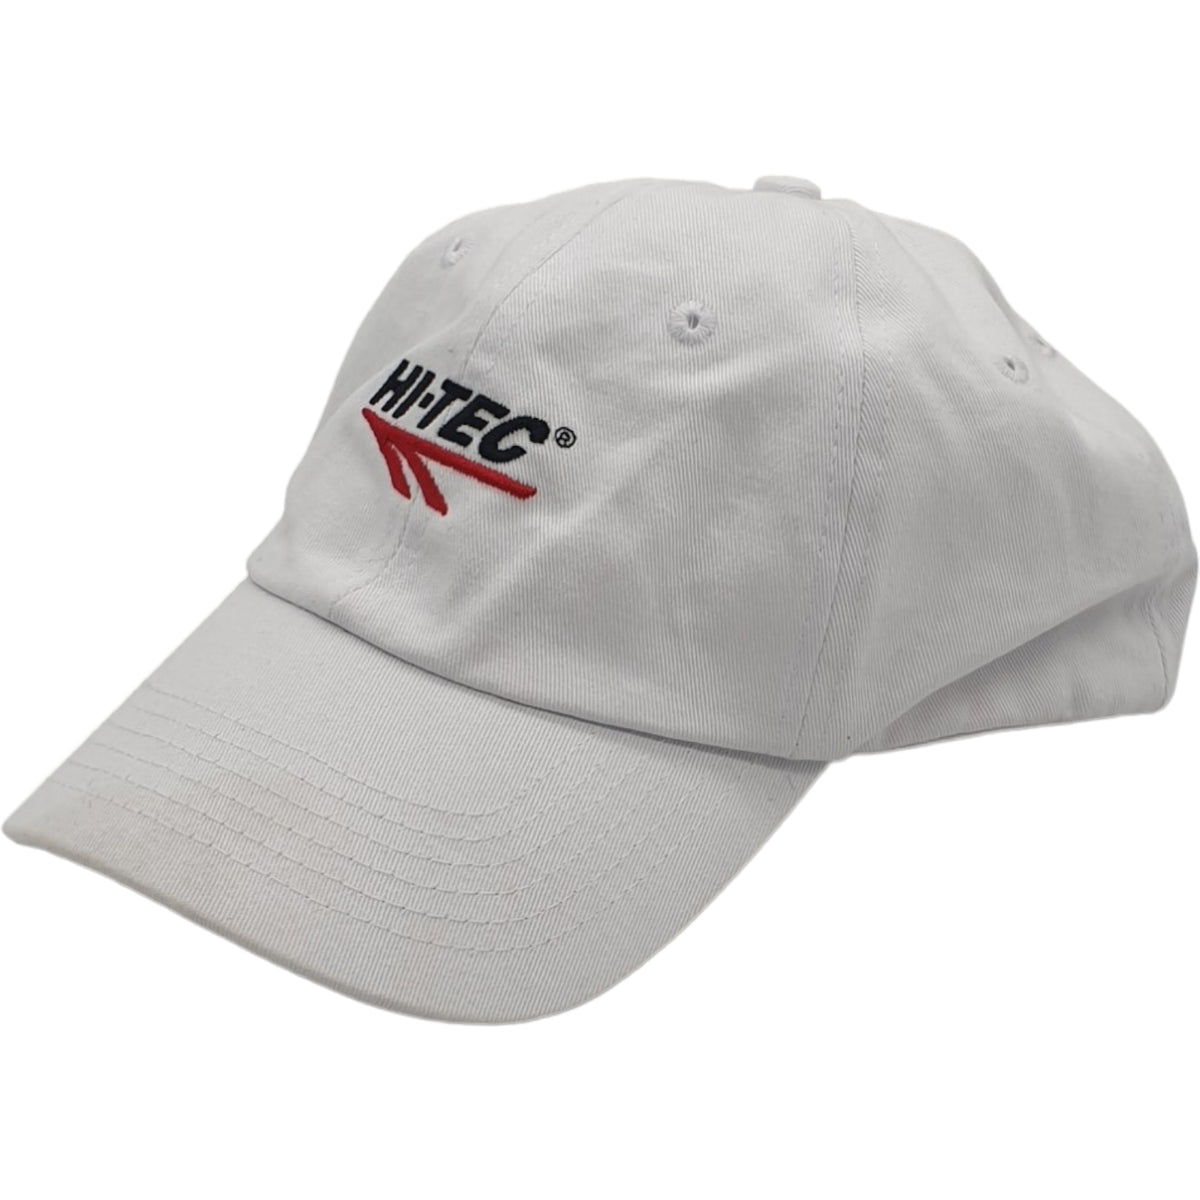 Paccman X Hi-Tec White Cap